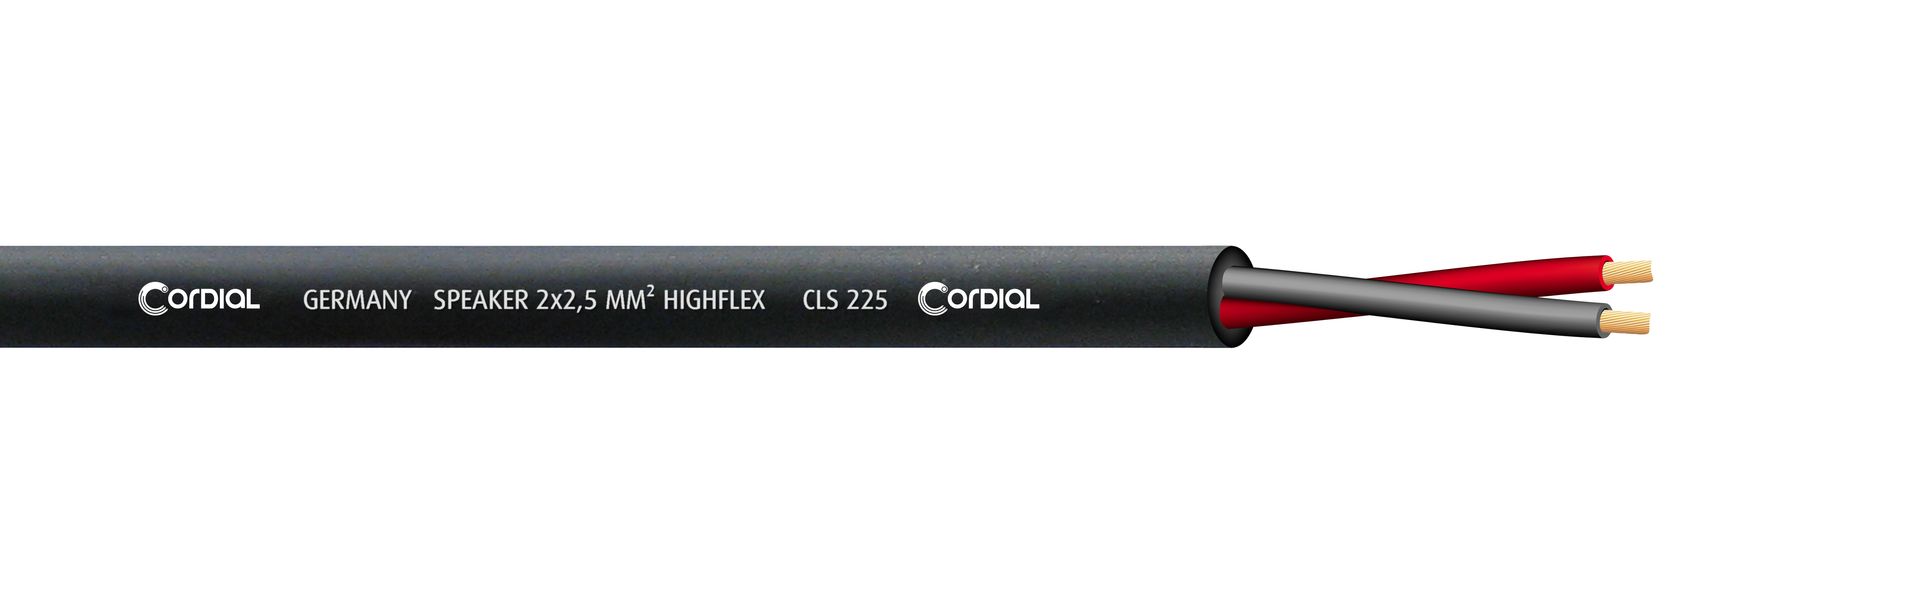 Cordial CLS 225 BK Lautsprecherkabel schwarz 2x2,50 qmm, Meterware Highflex